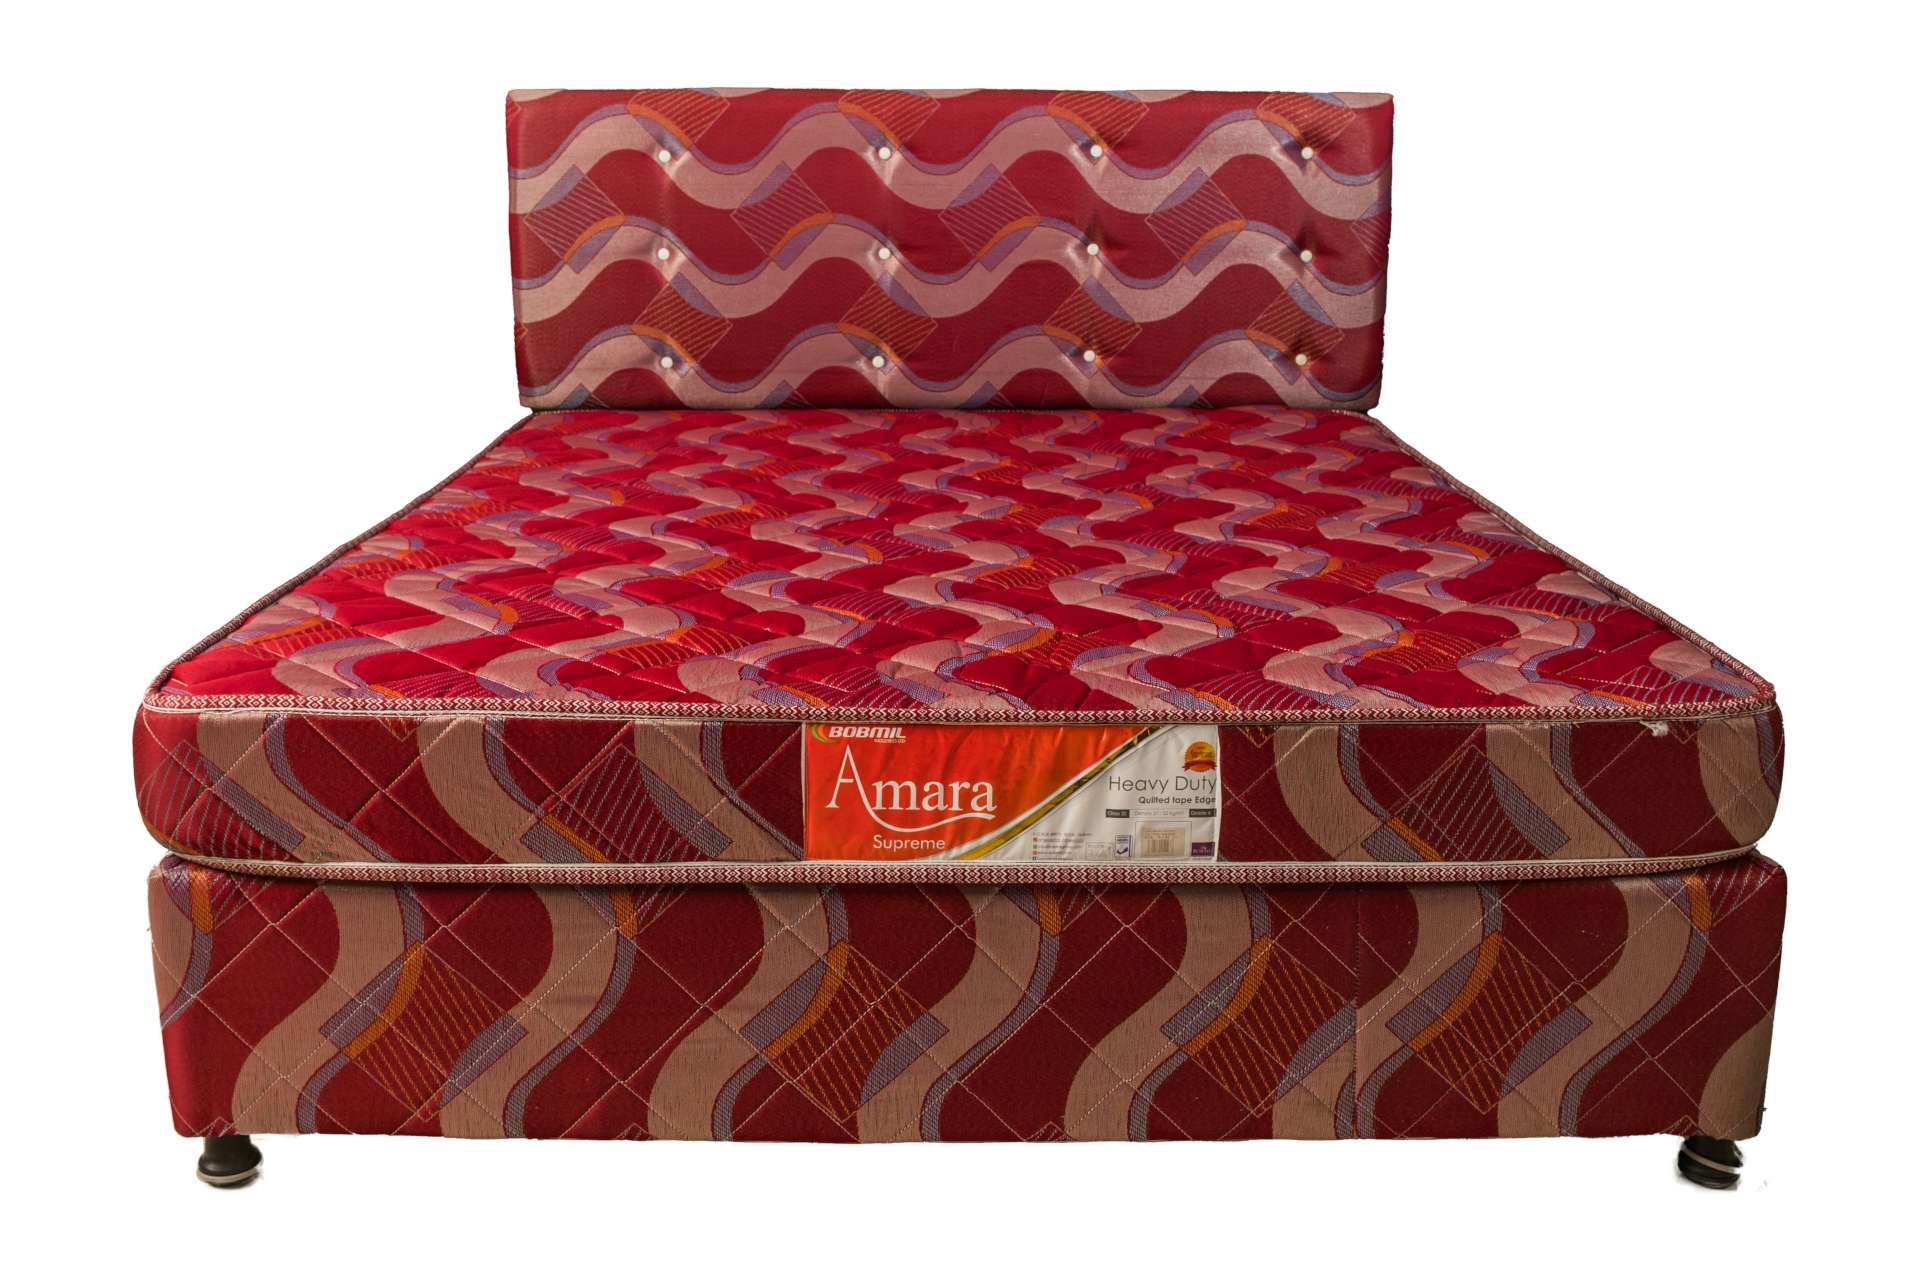 bobmil mattresses prices in nairobi